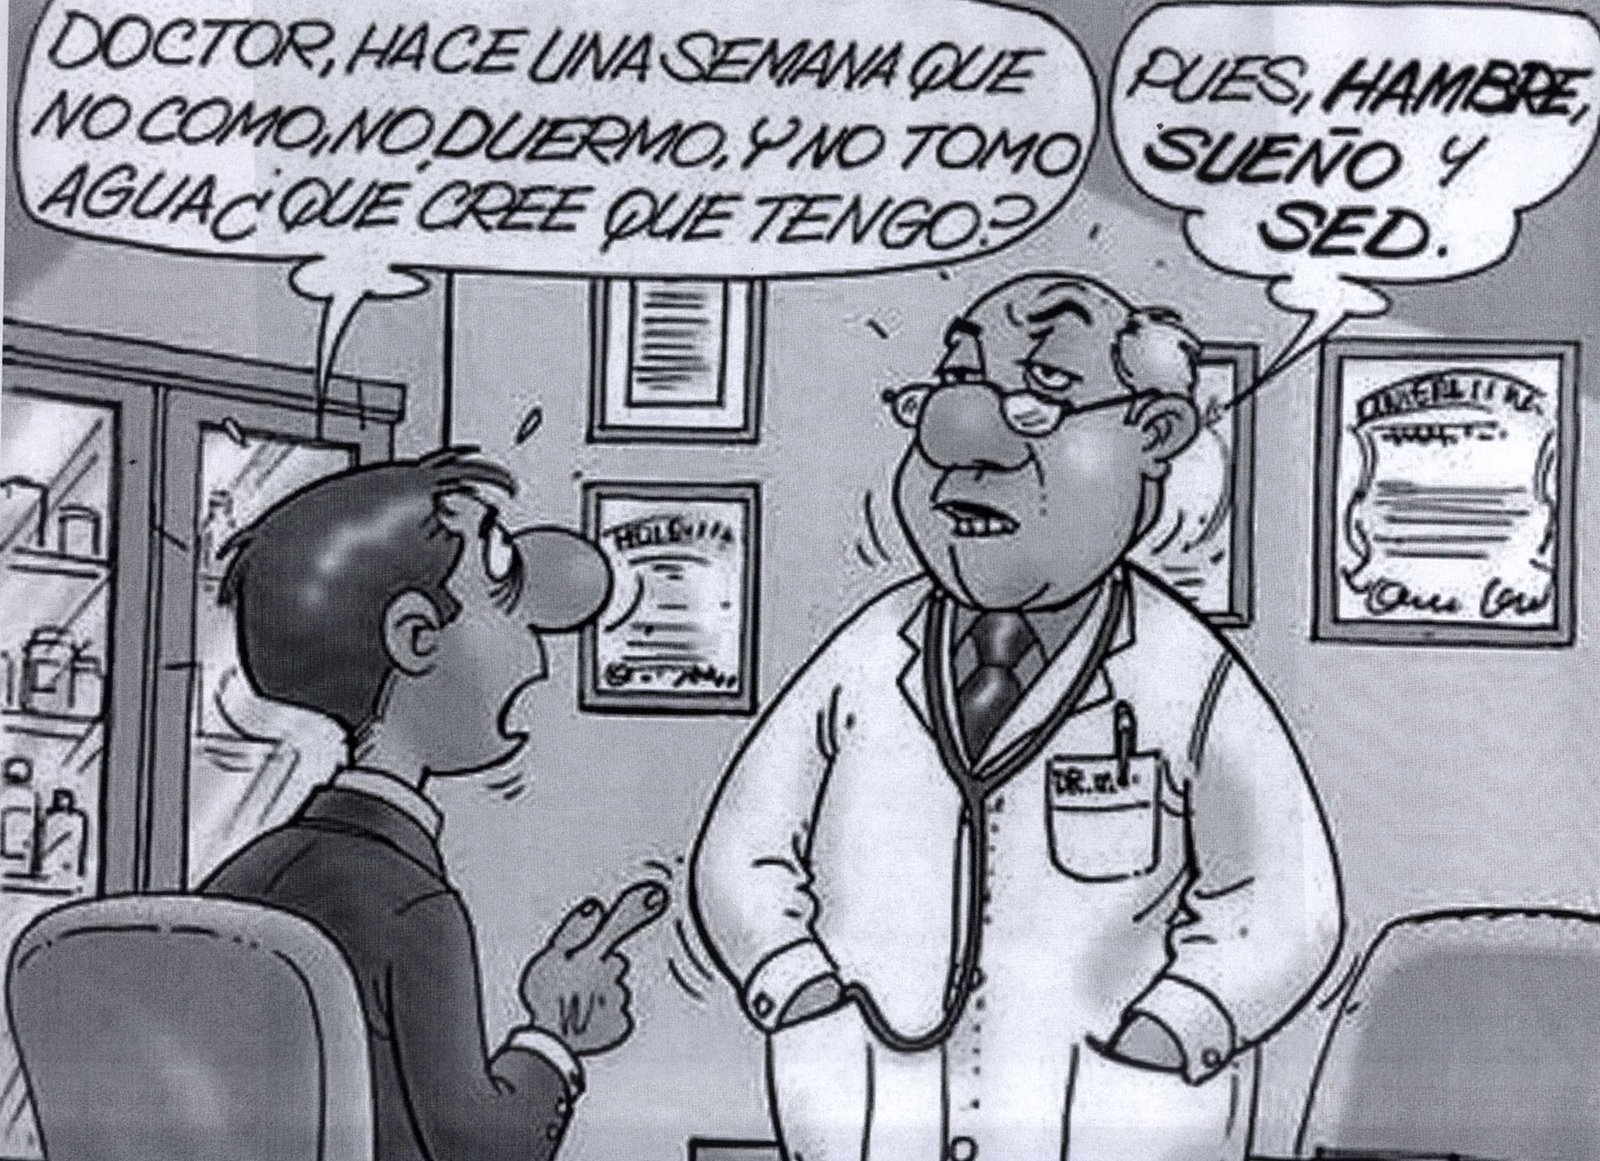 [Caricatura+DOCTOR.jpg]